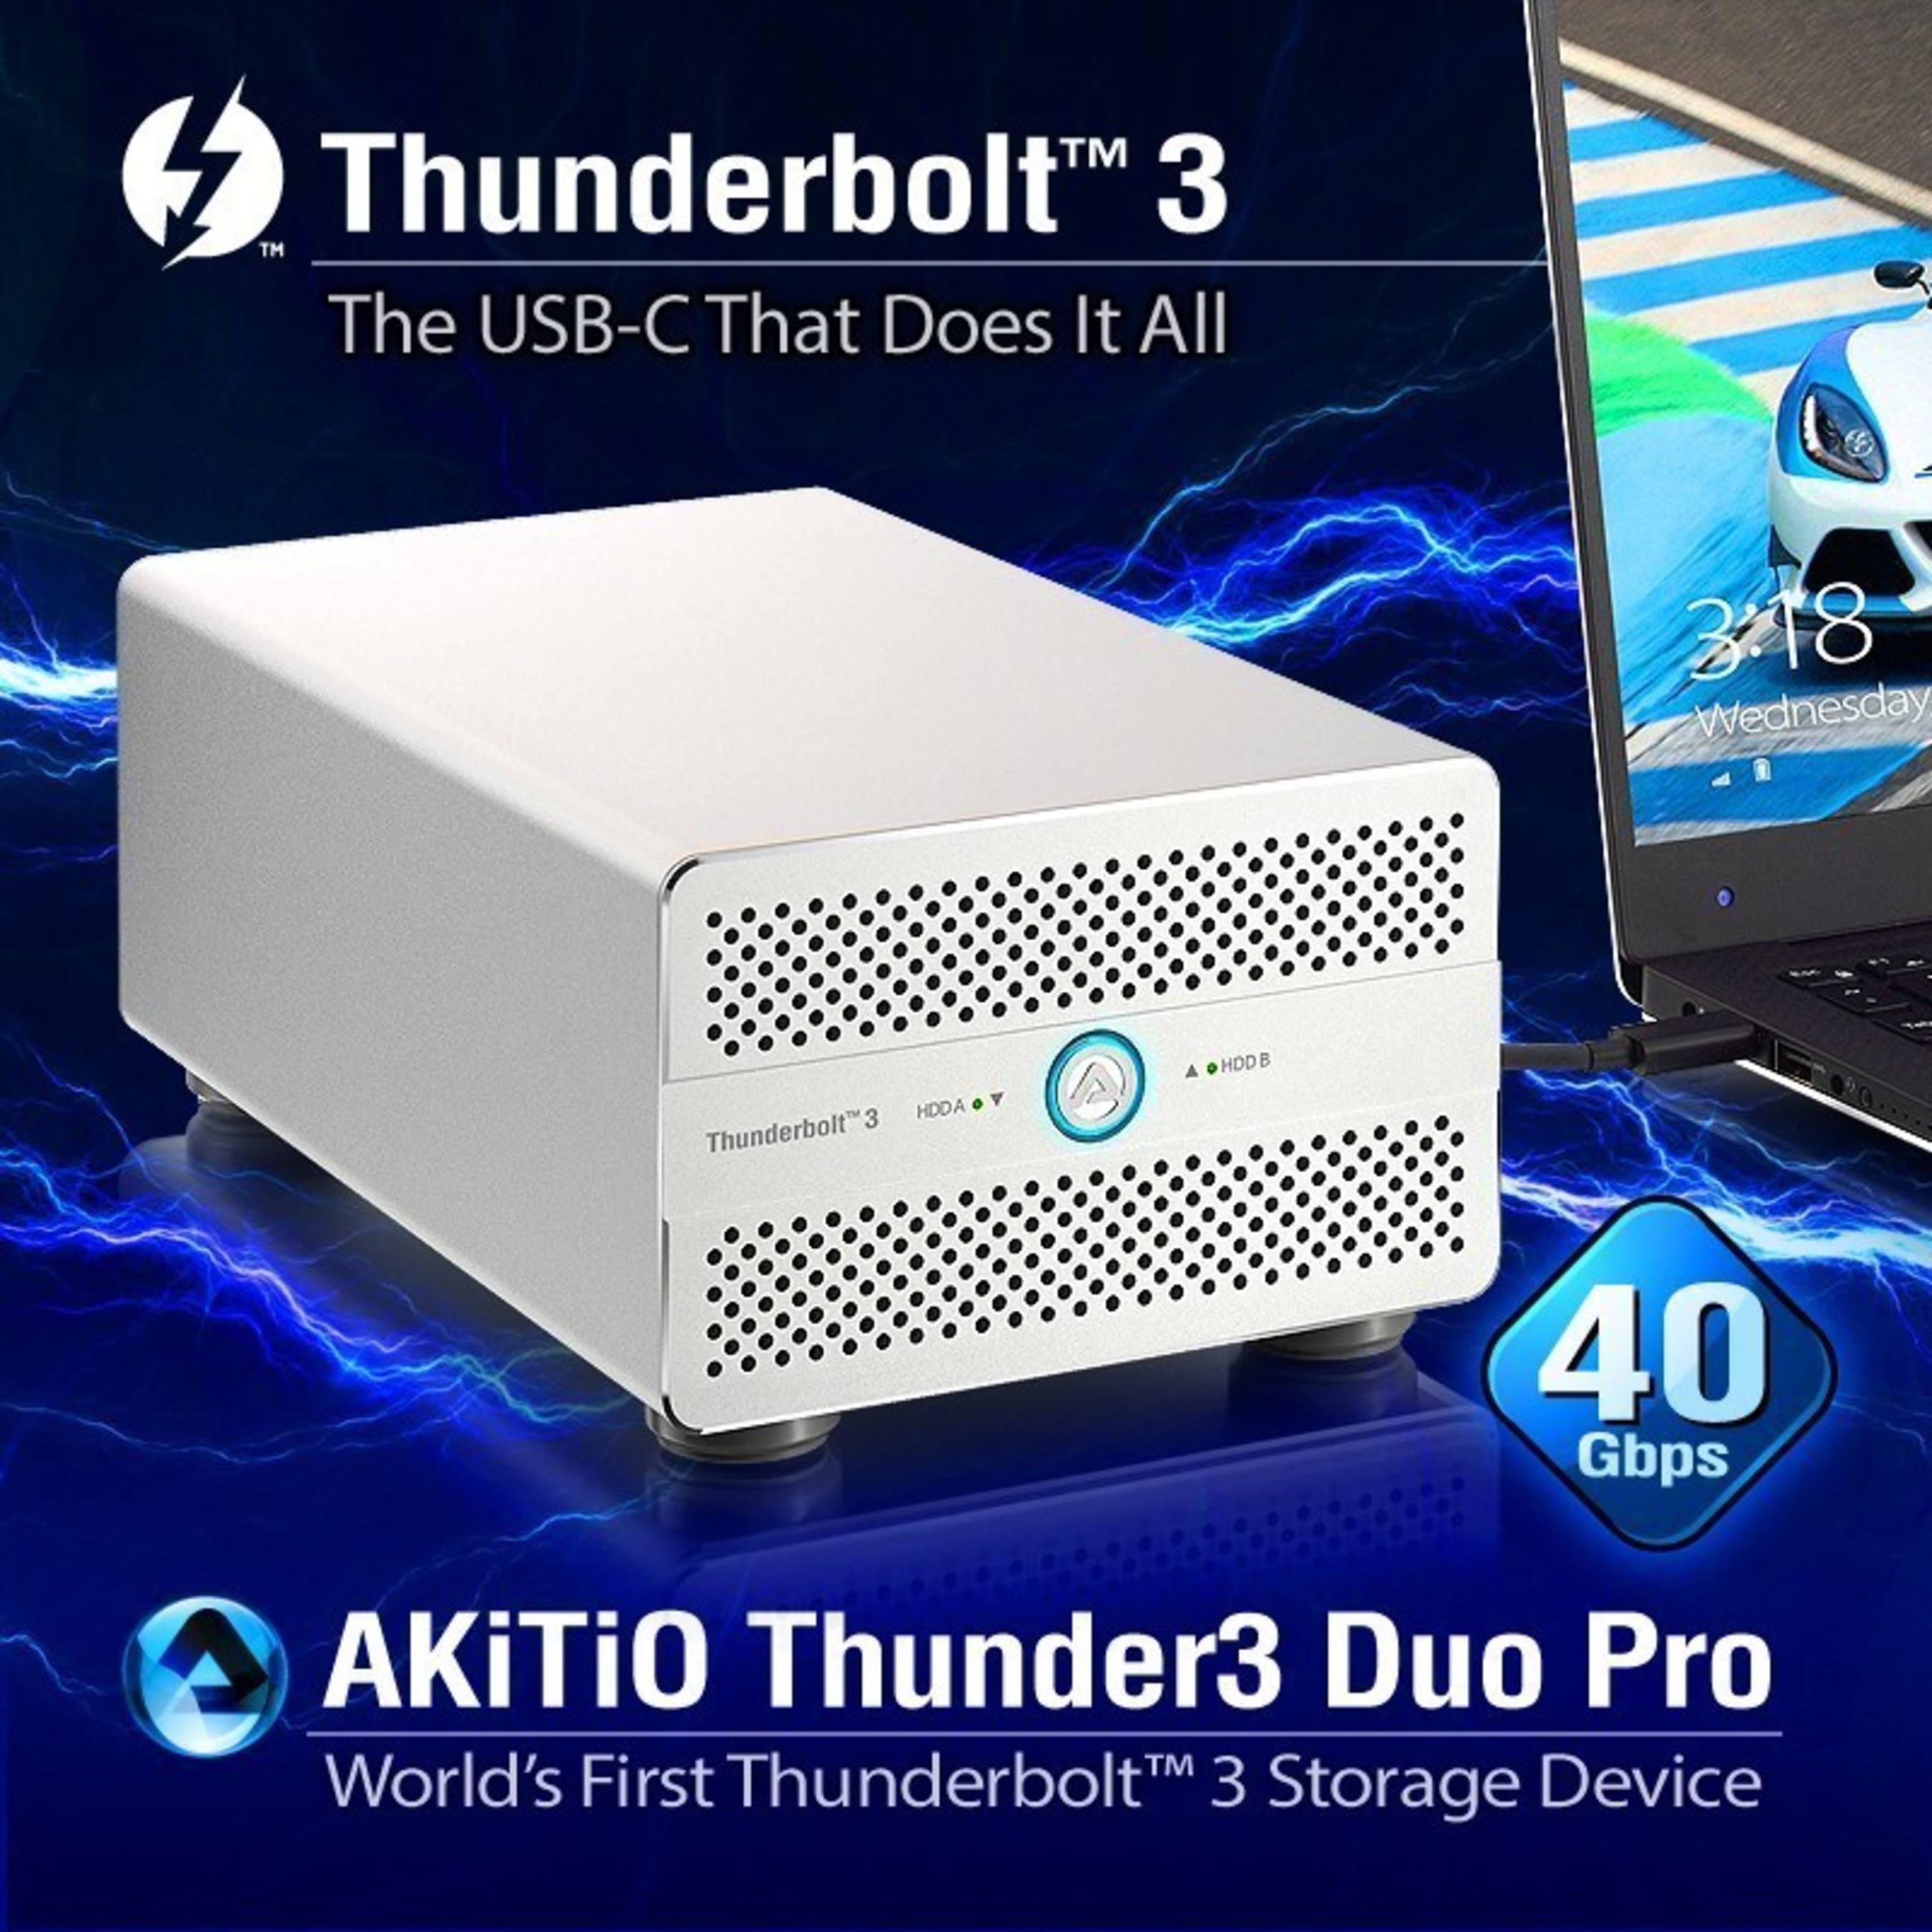 Akitio Thunder3 Duo Pro